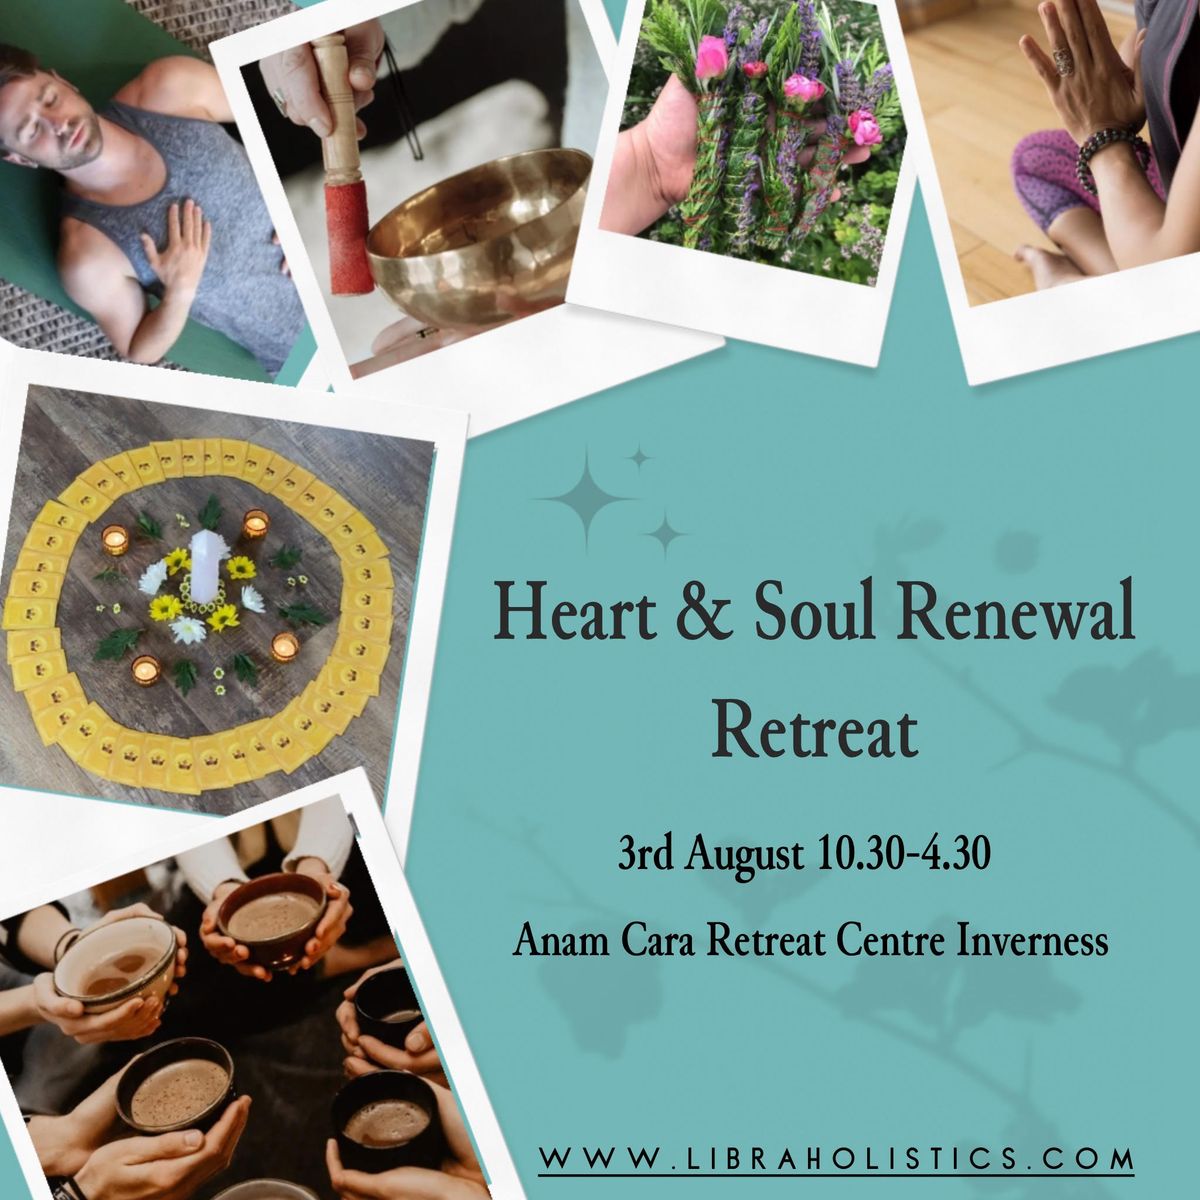 Heart & Soul Renewal Retreat